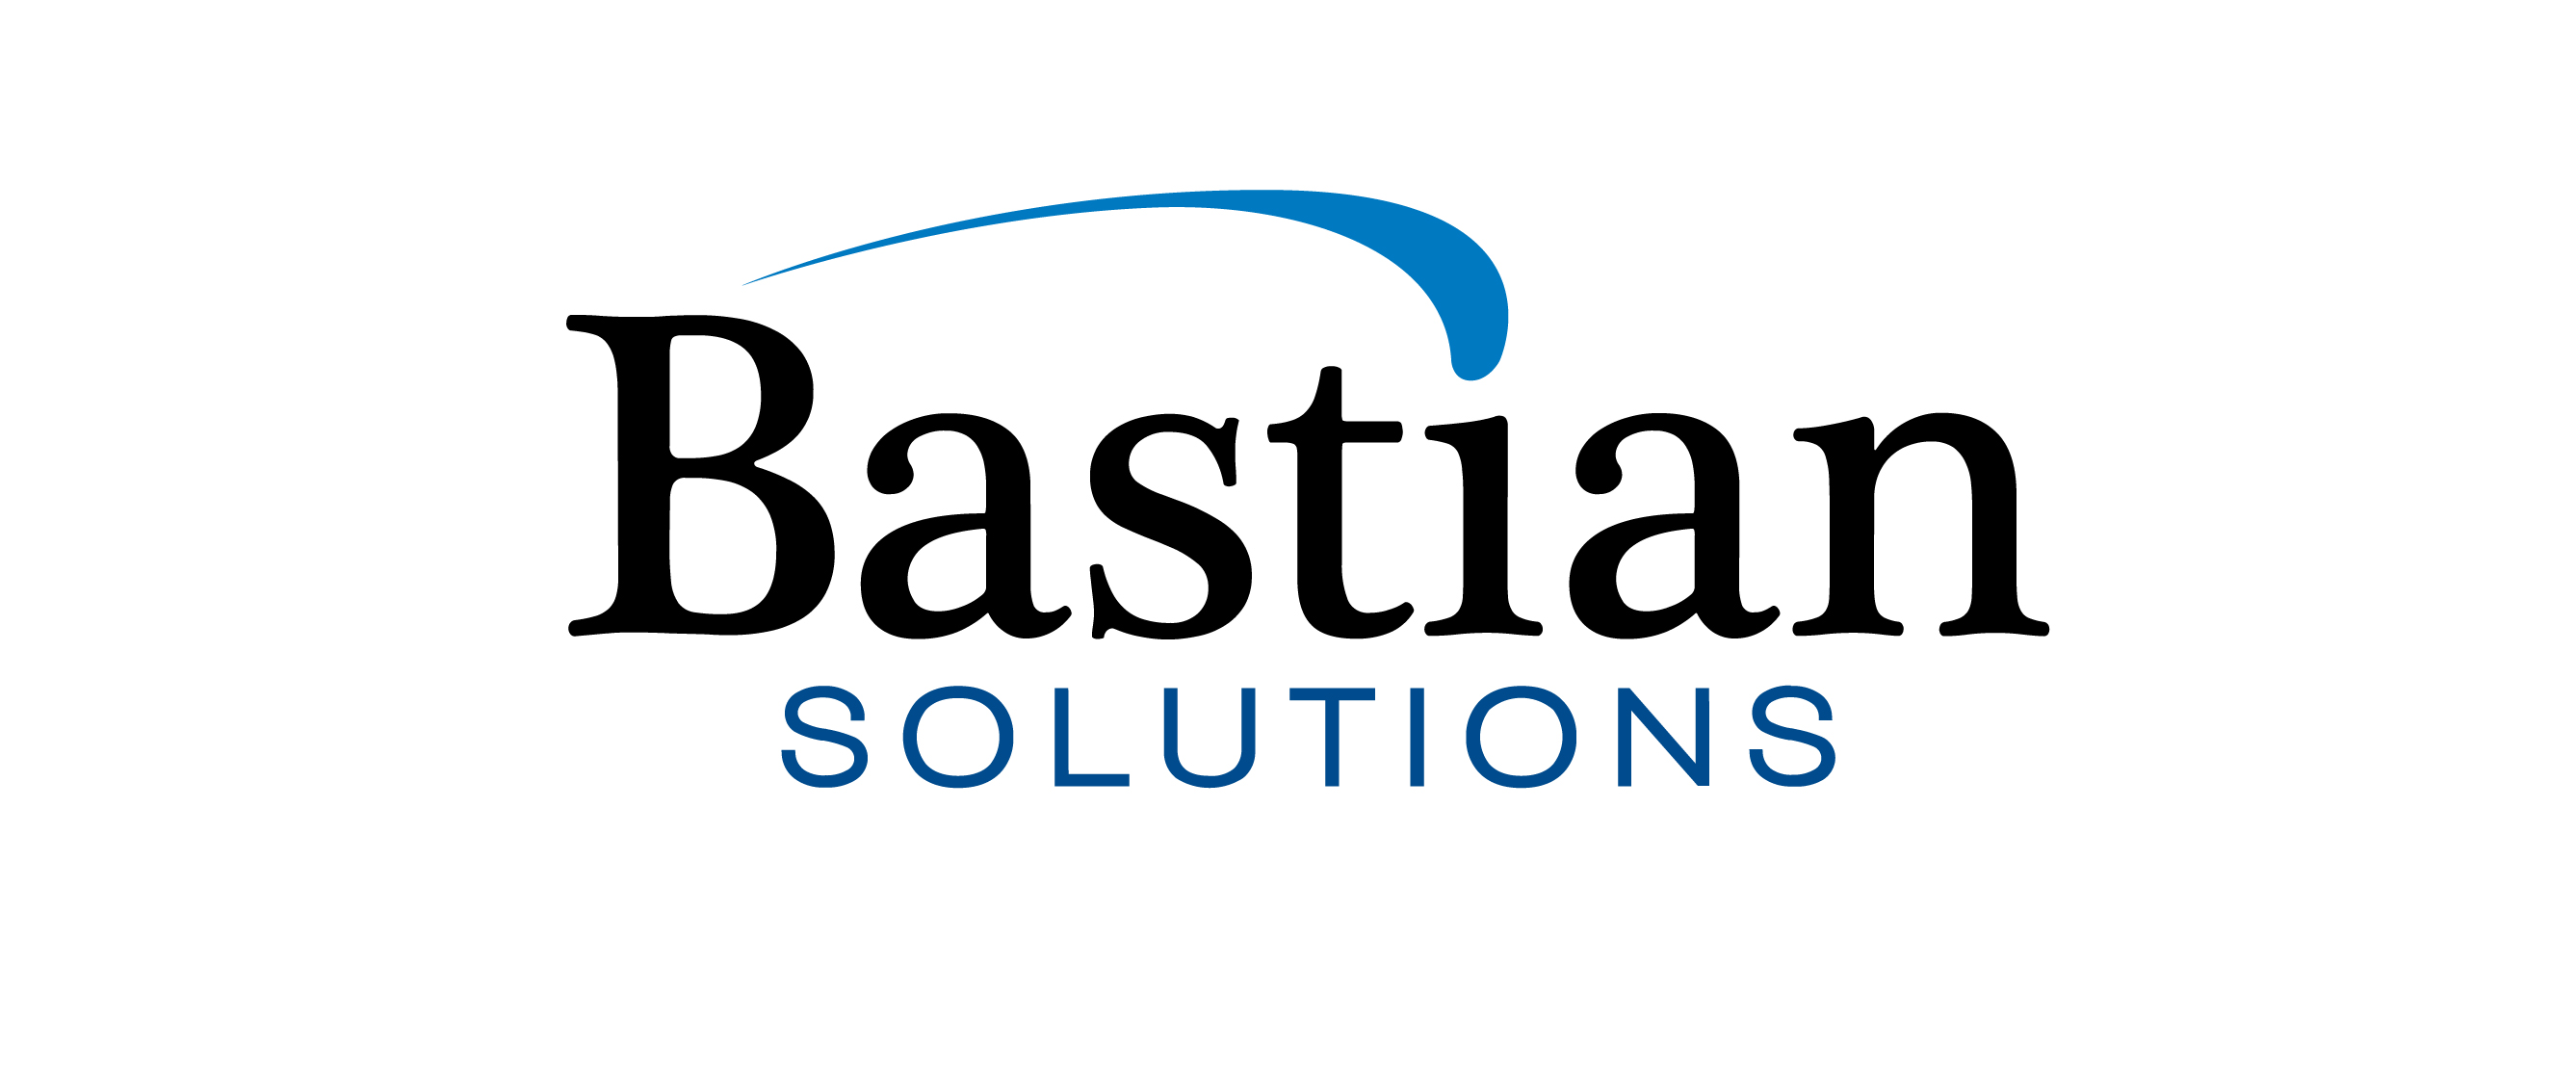 bastian-logo